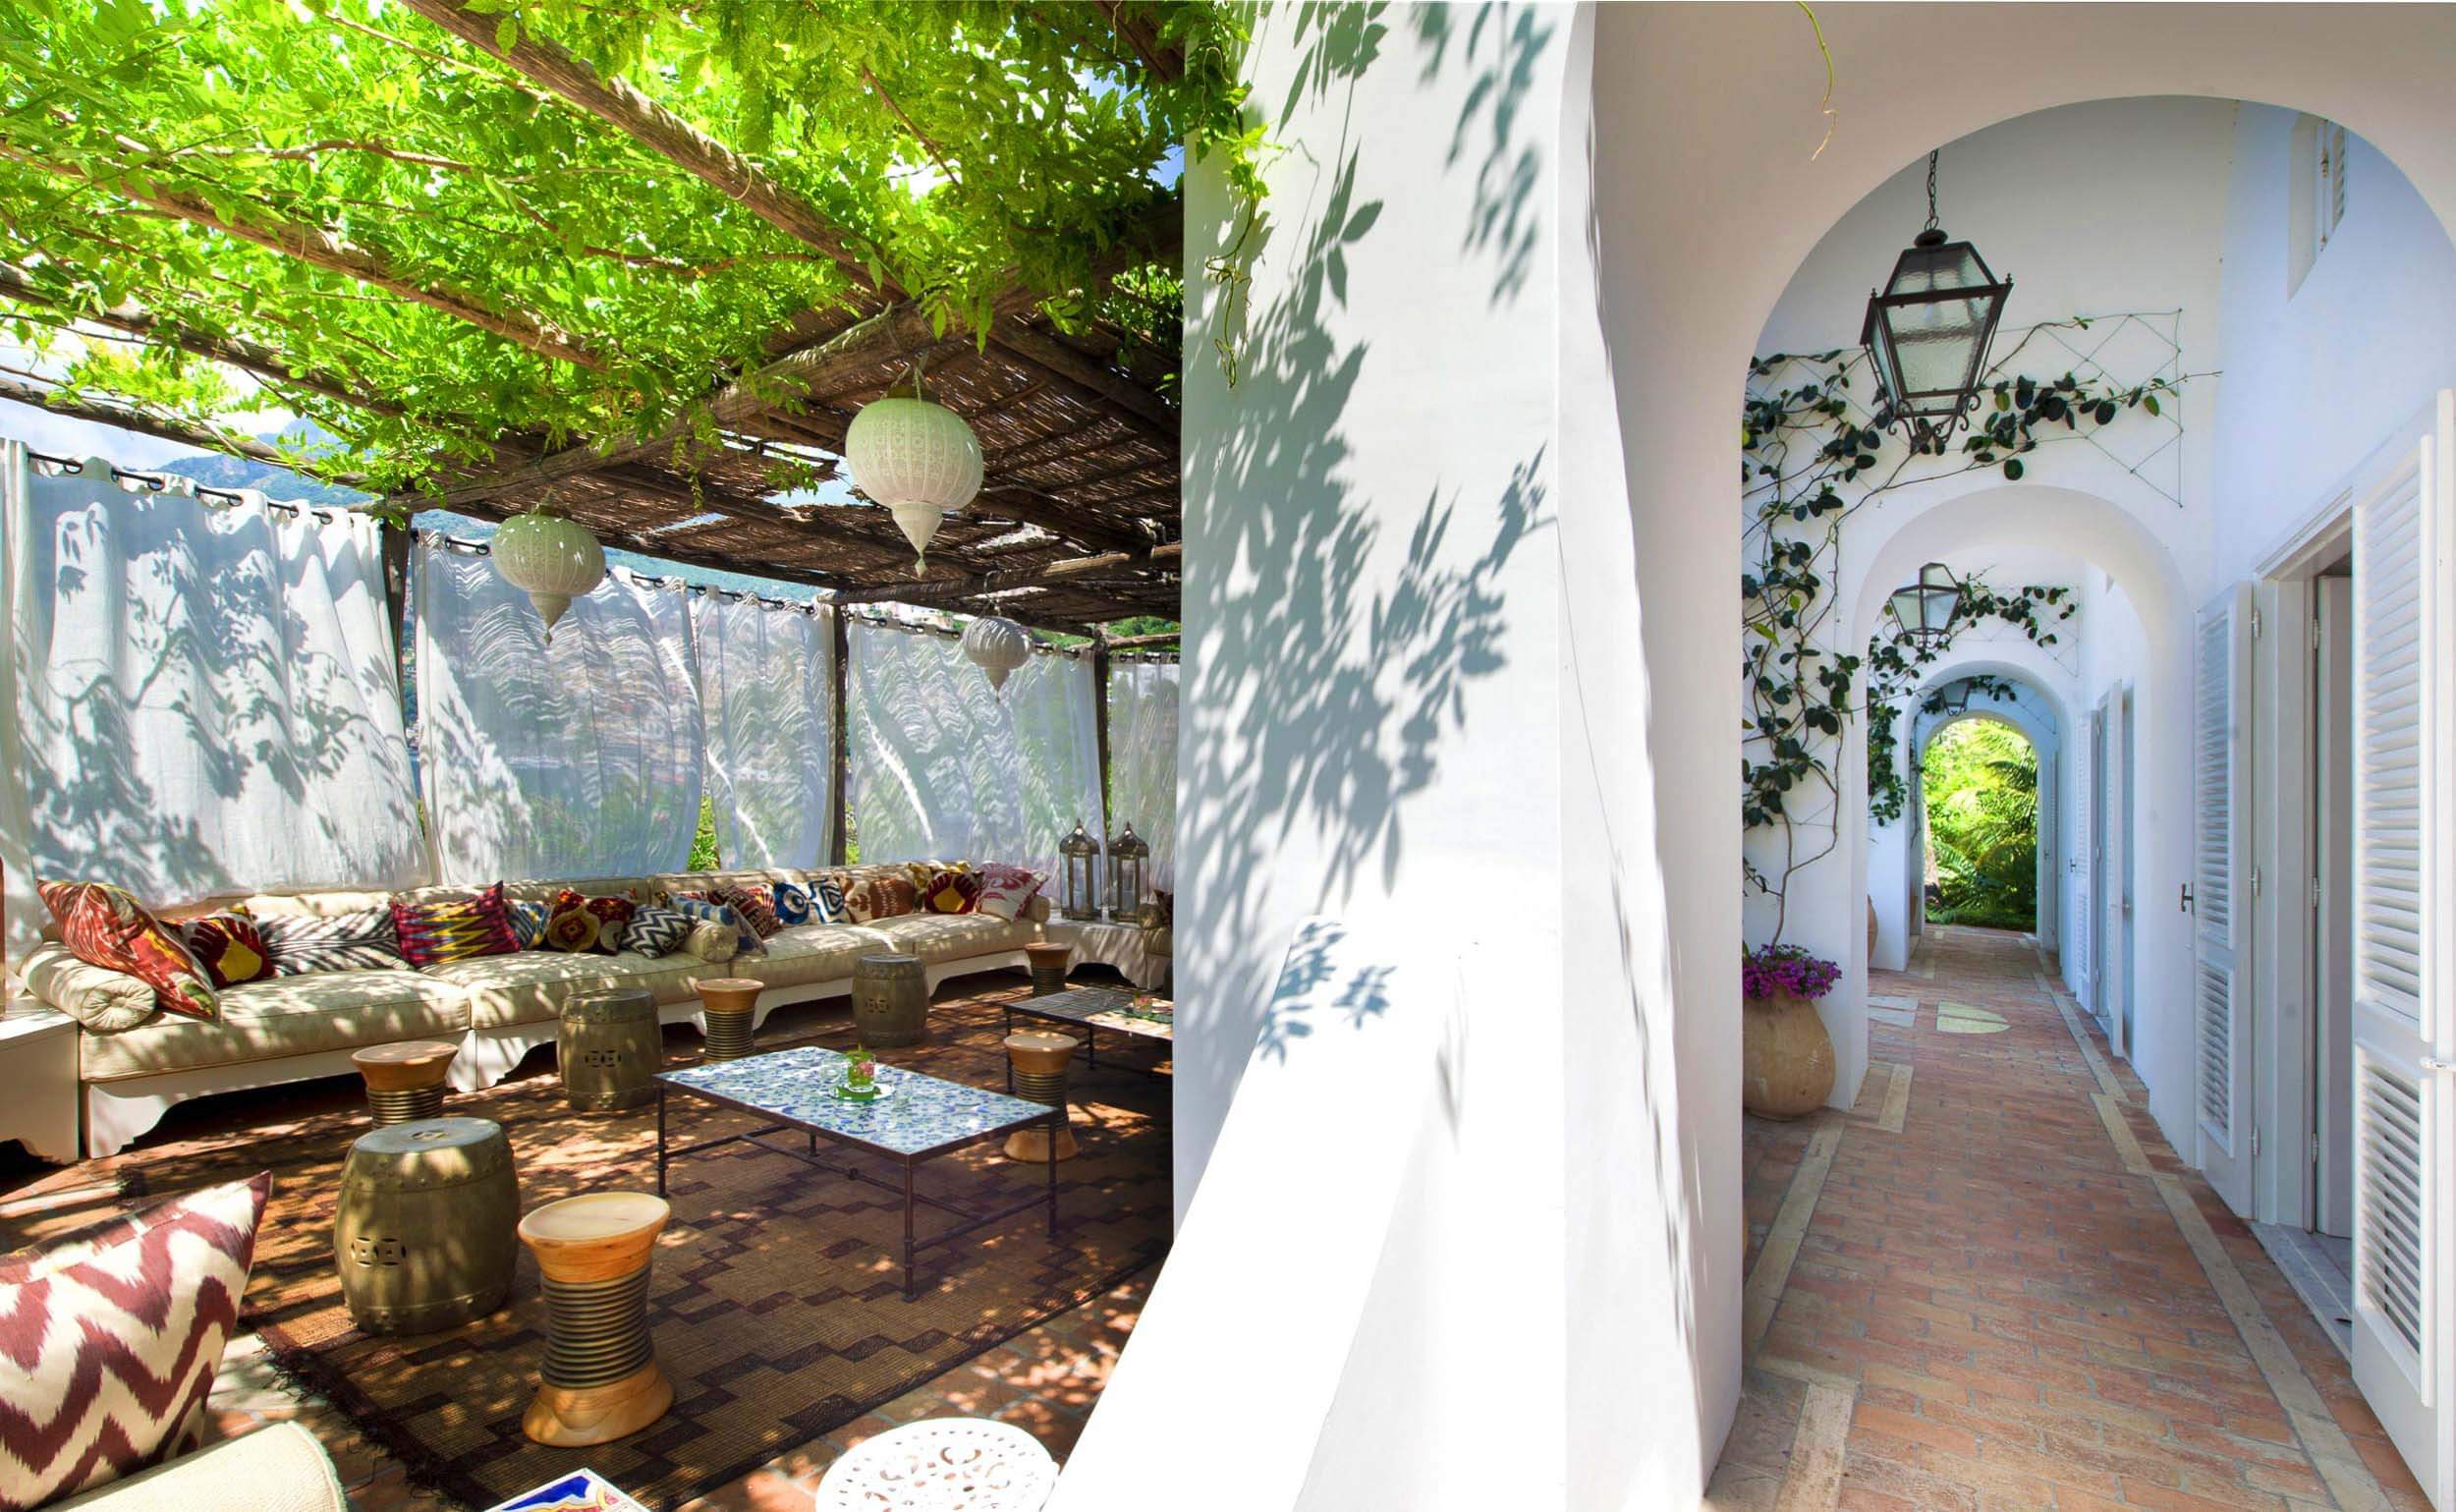 The best Amalfi Coast villas can be found at Villa Treville in Positano